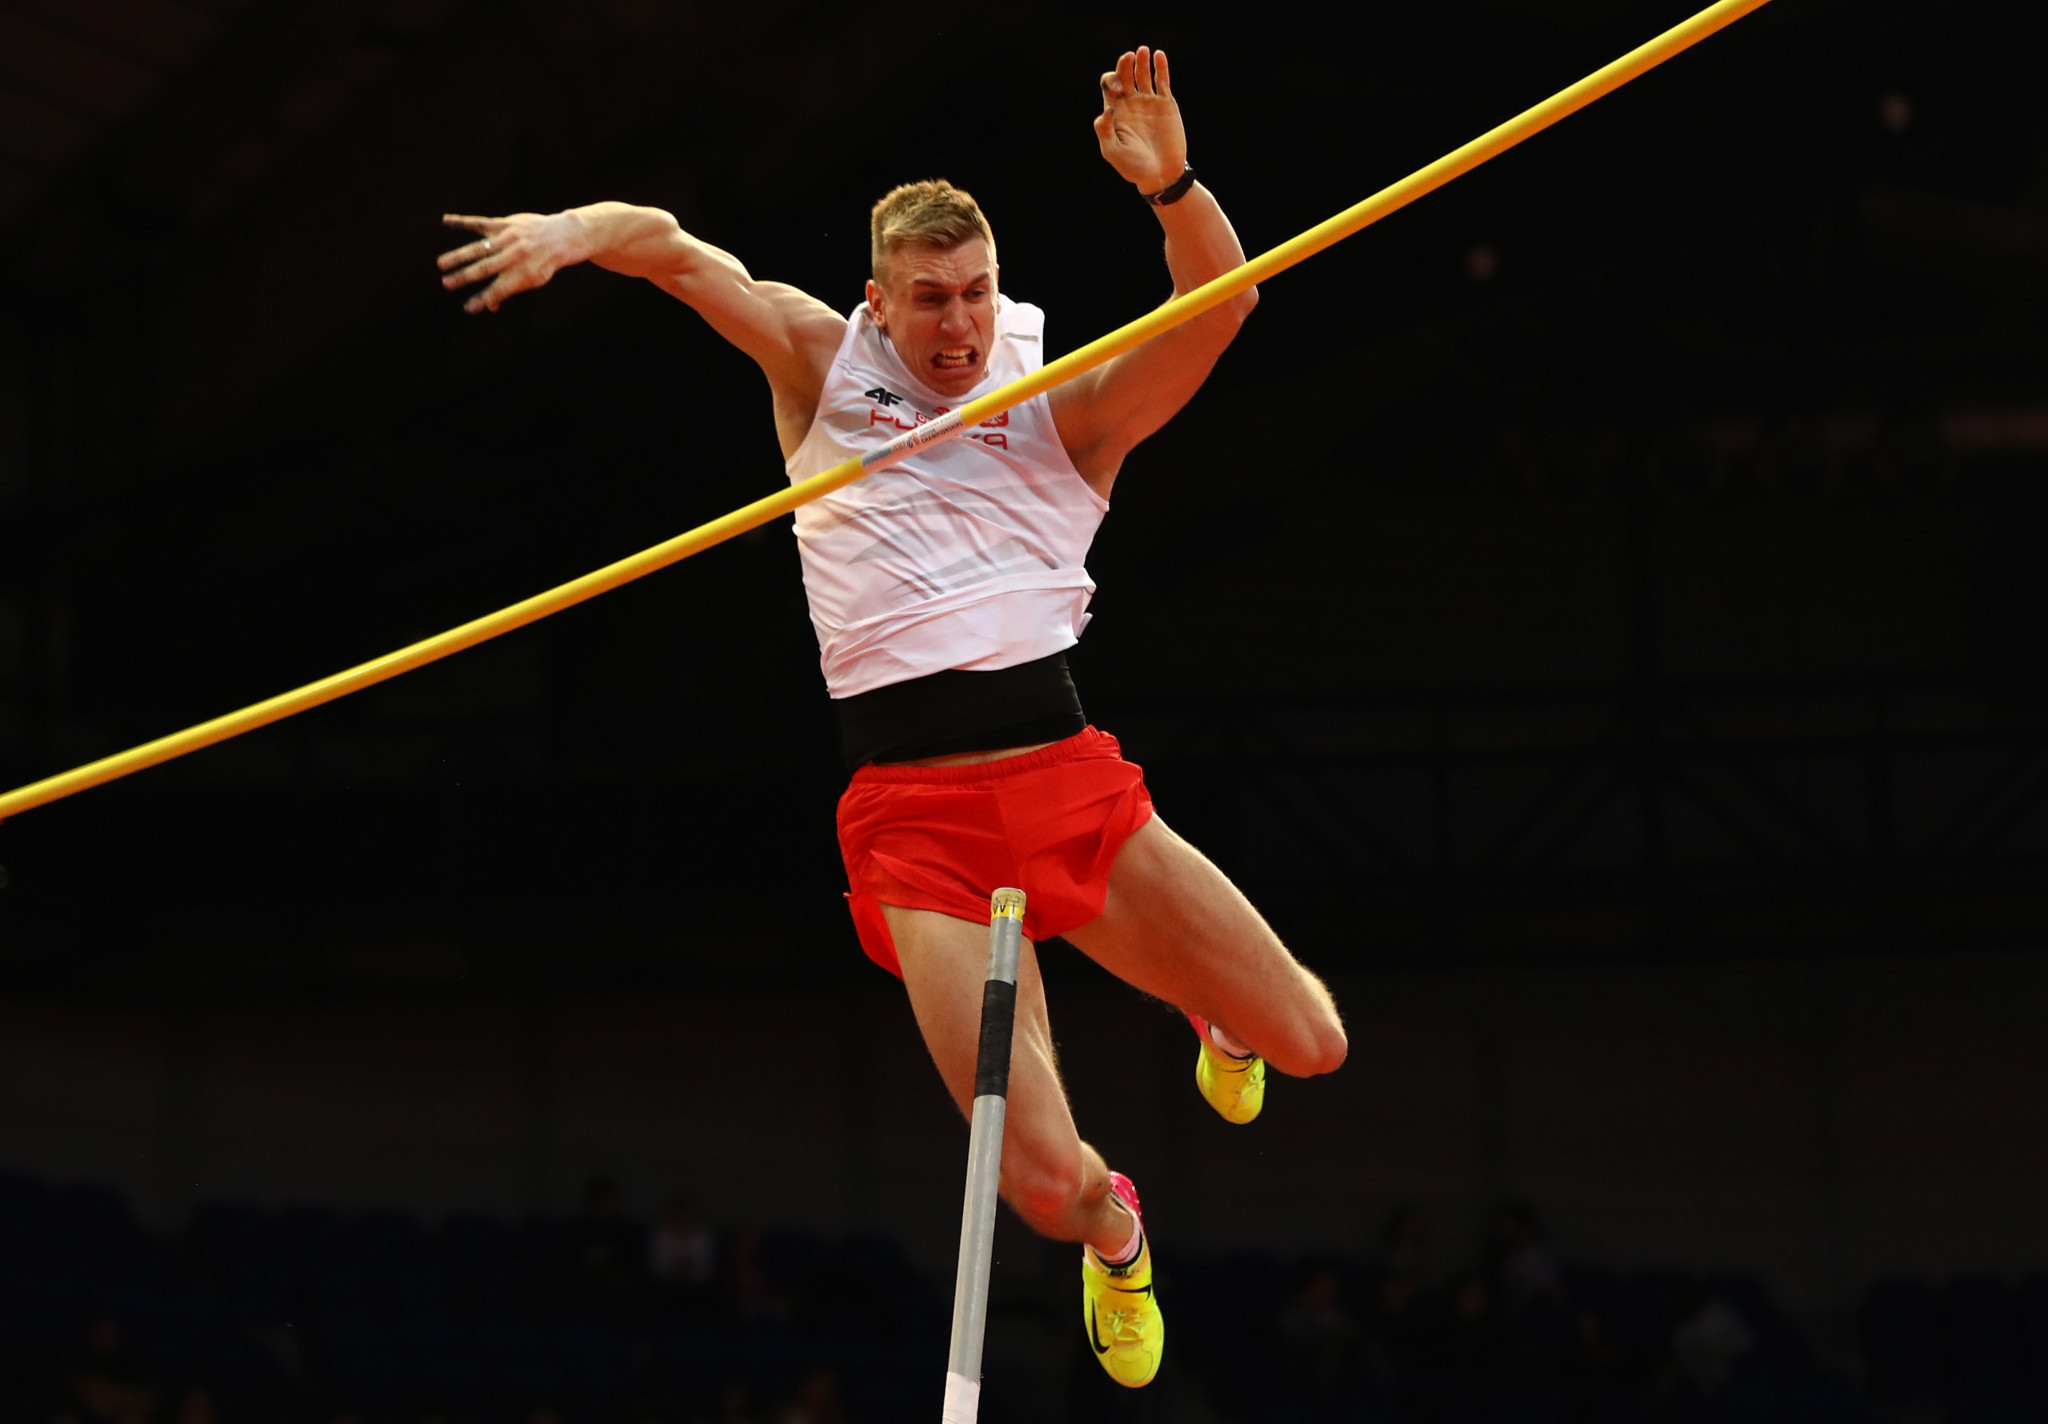 Piotr Lisek claimed the men's pole vault title on home soil ©Getty Images